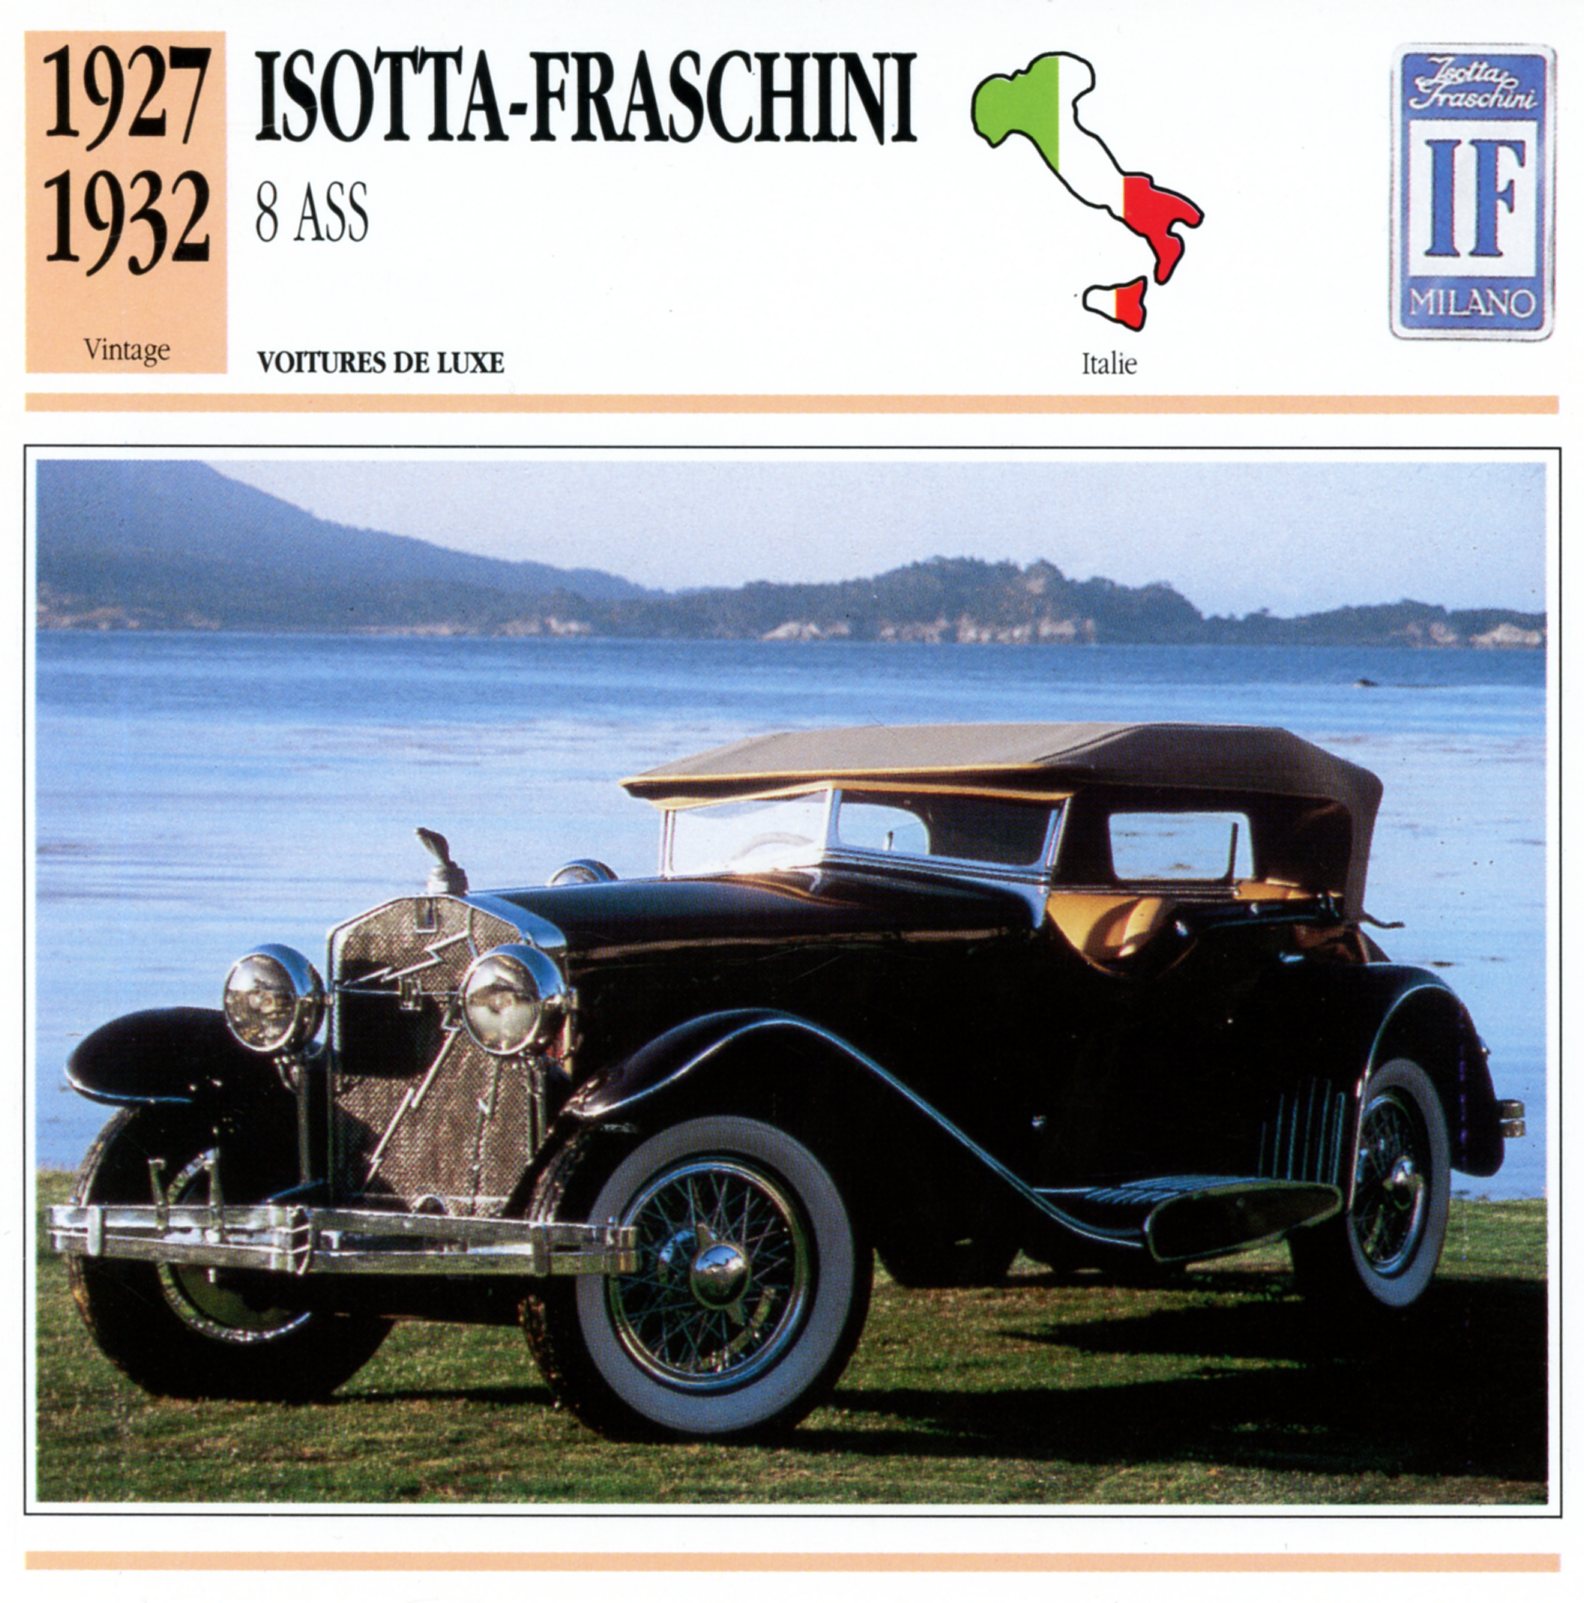 ISOTTA FRASCHINI 8ASS 1927-1932 FICHE AUTO COLLECTION ATLAS